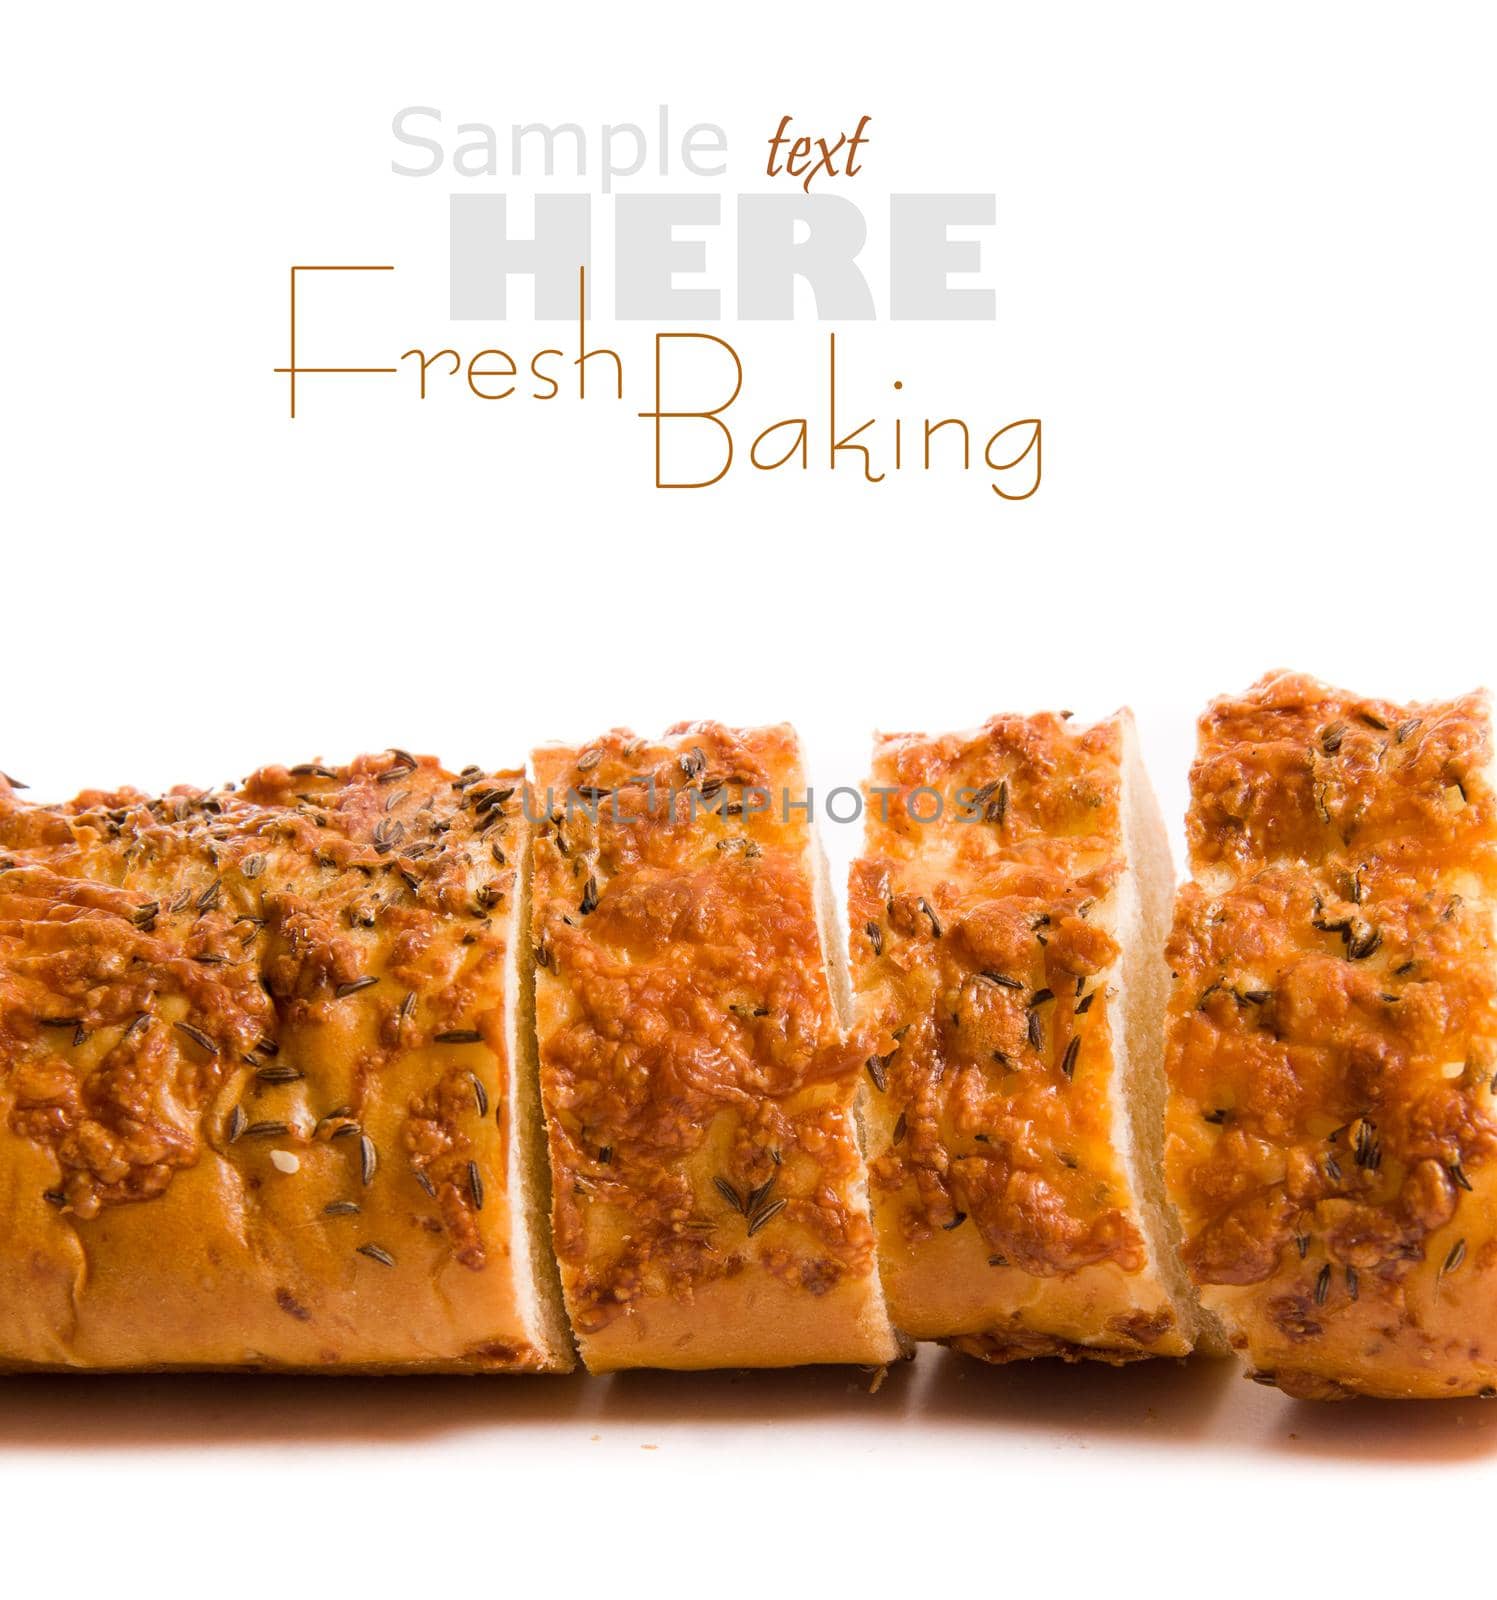 Fresh-baked loaf by tan4ikk1